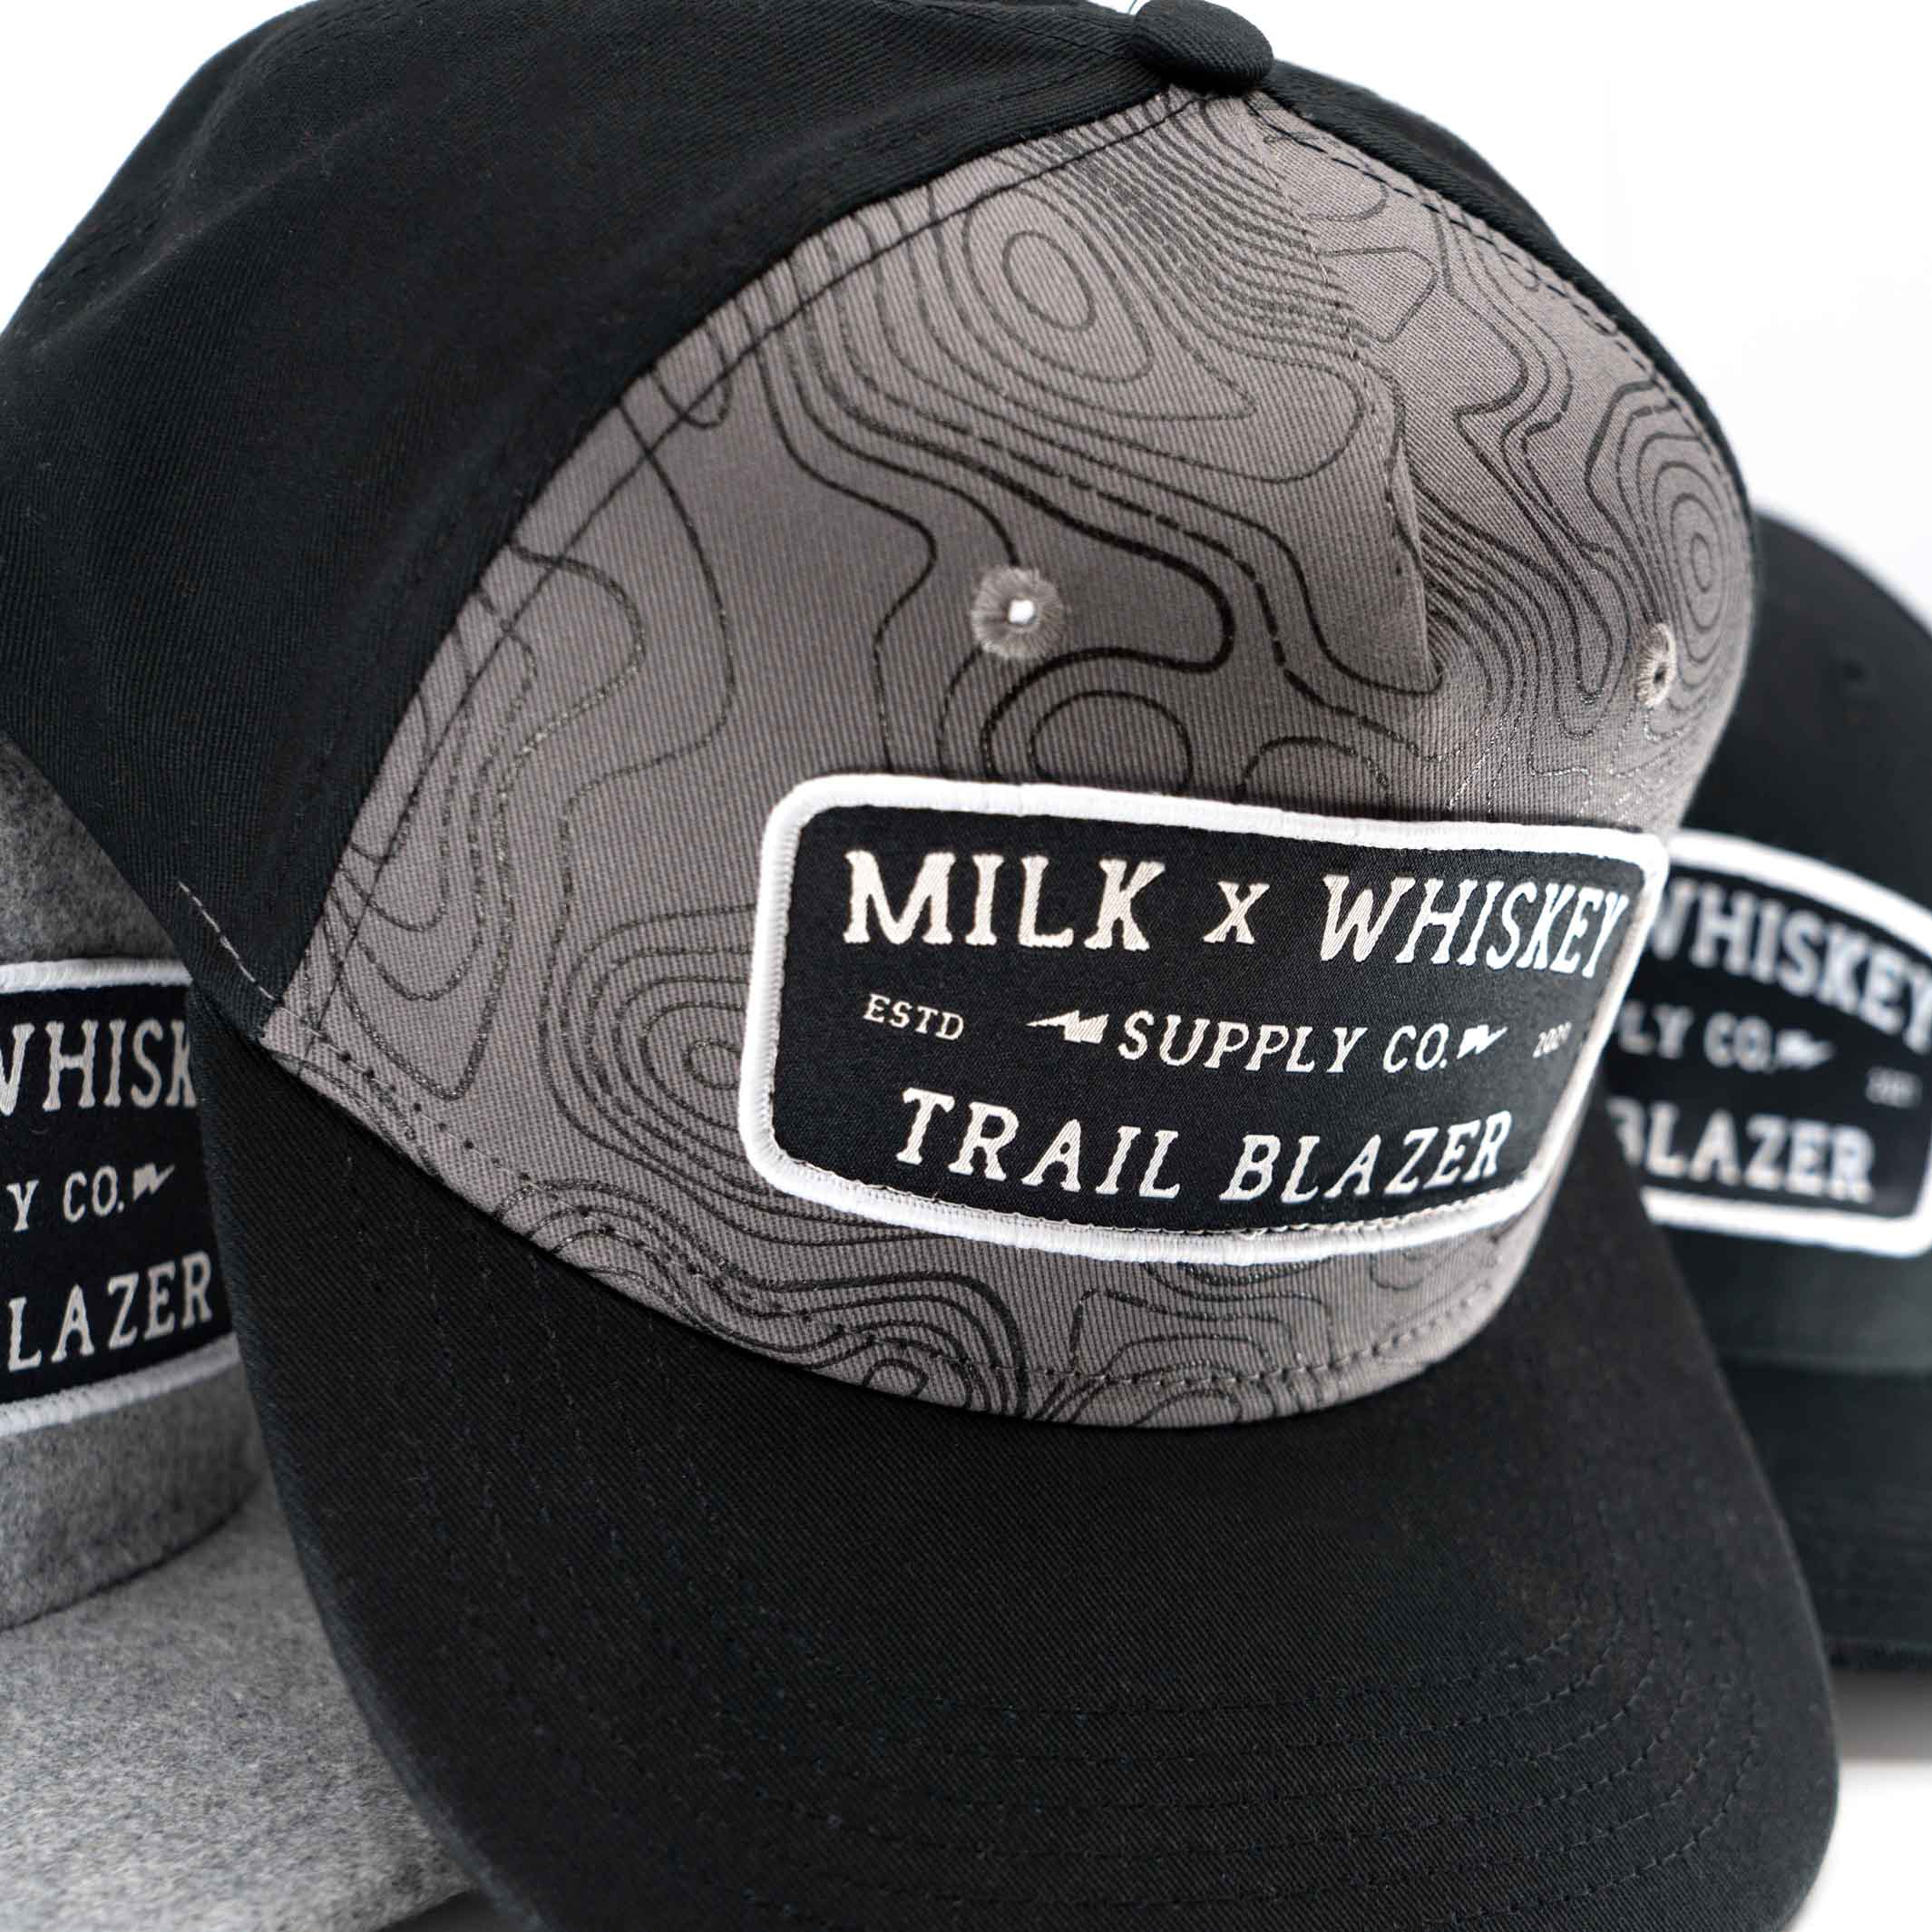 Milk x Whiskey Outdoor Adventure Hats